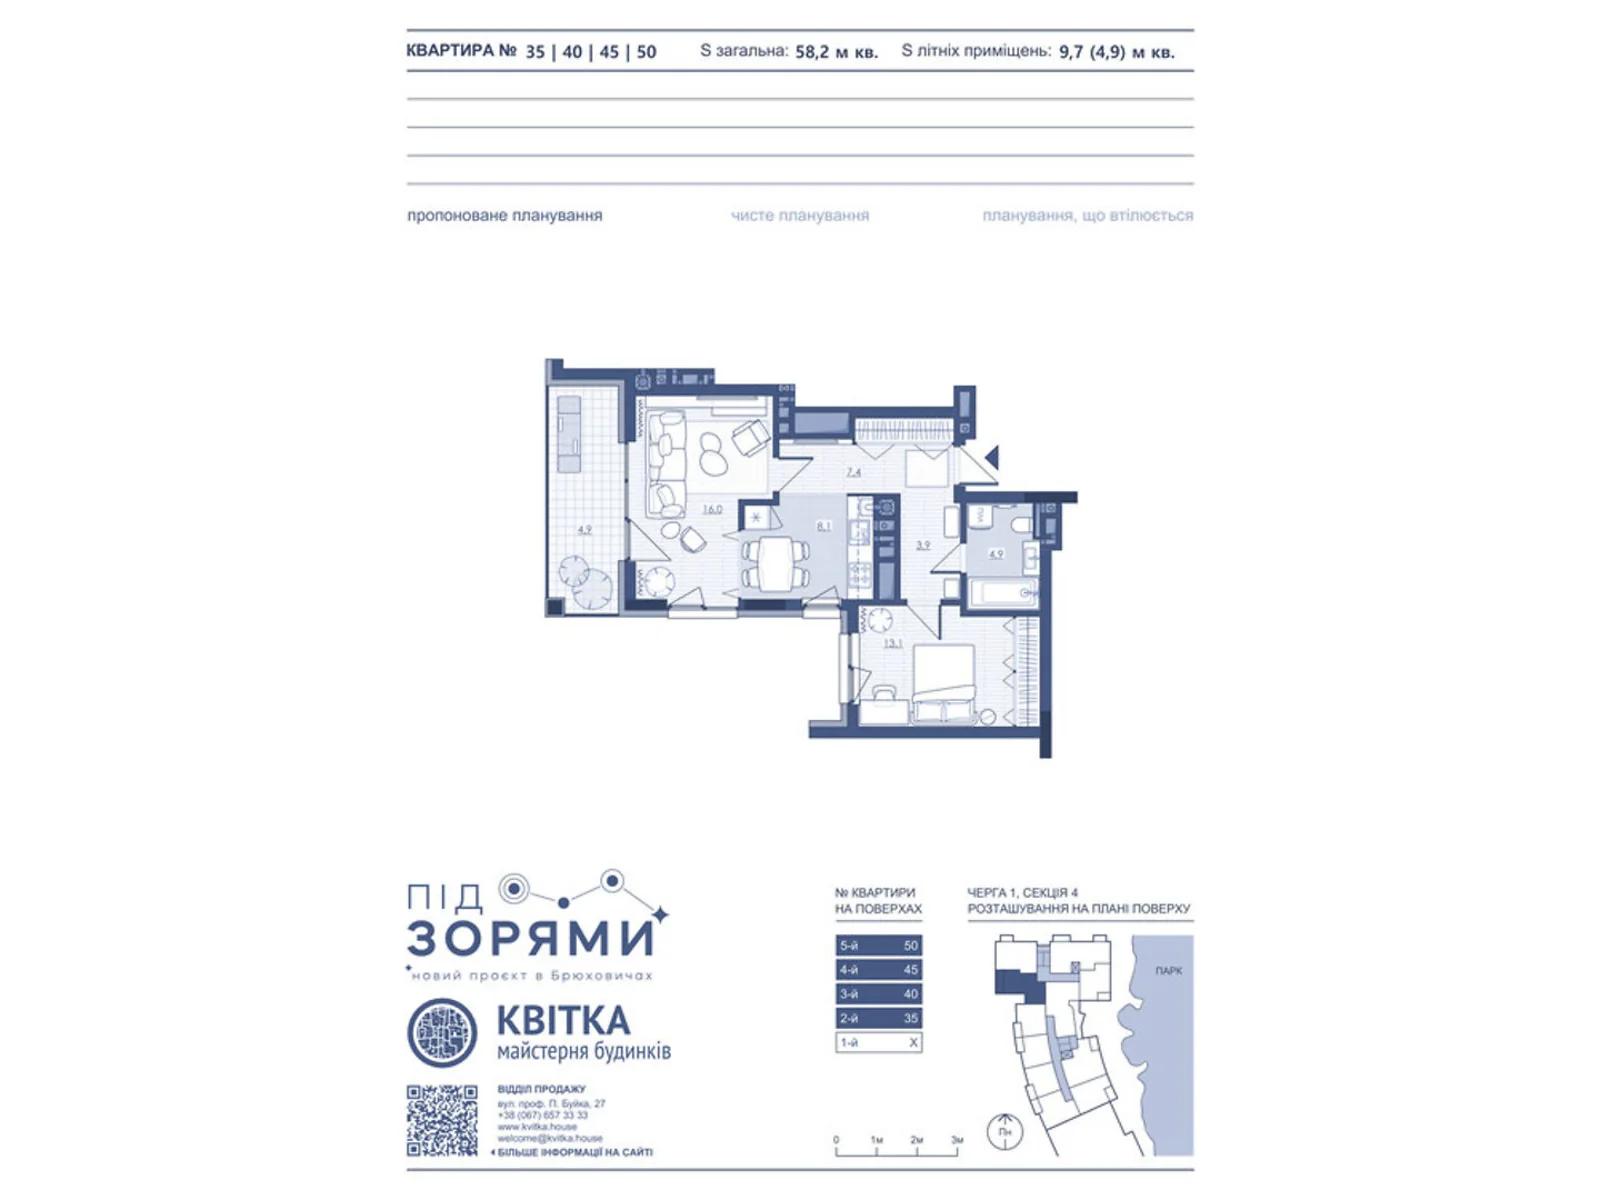 Продается 1-комнатная квартира 58.2 кв. м в Брюховичах, цена: 57618 $ - фото 1